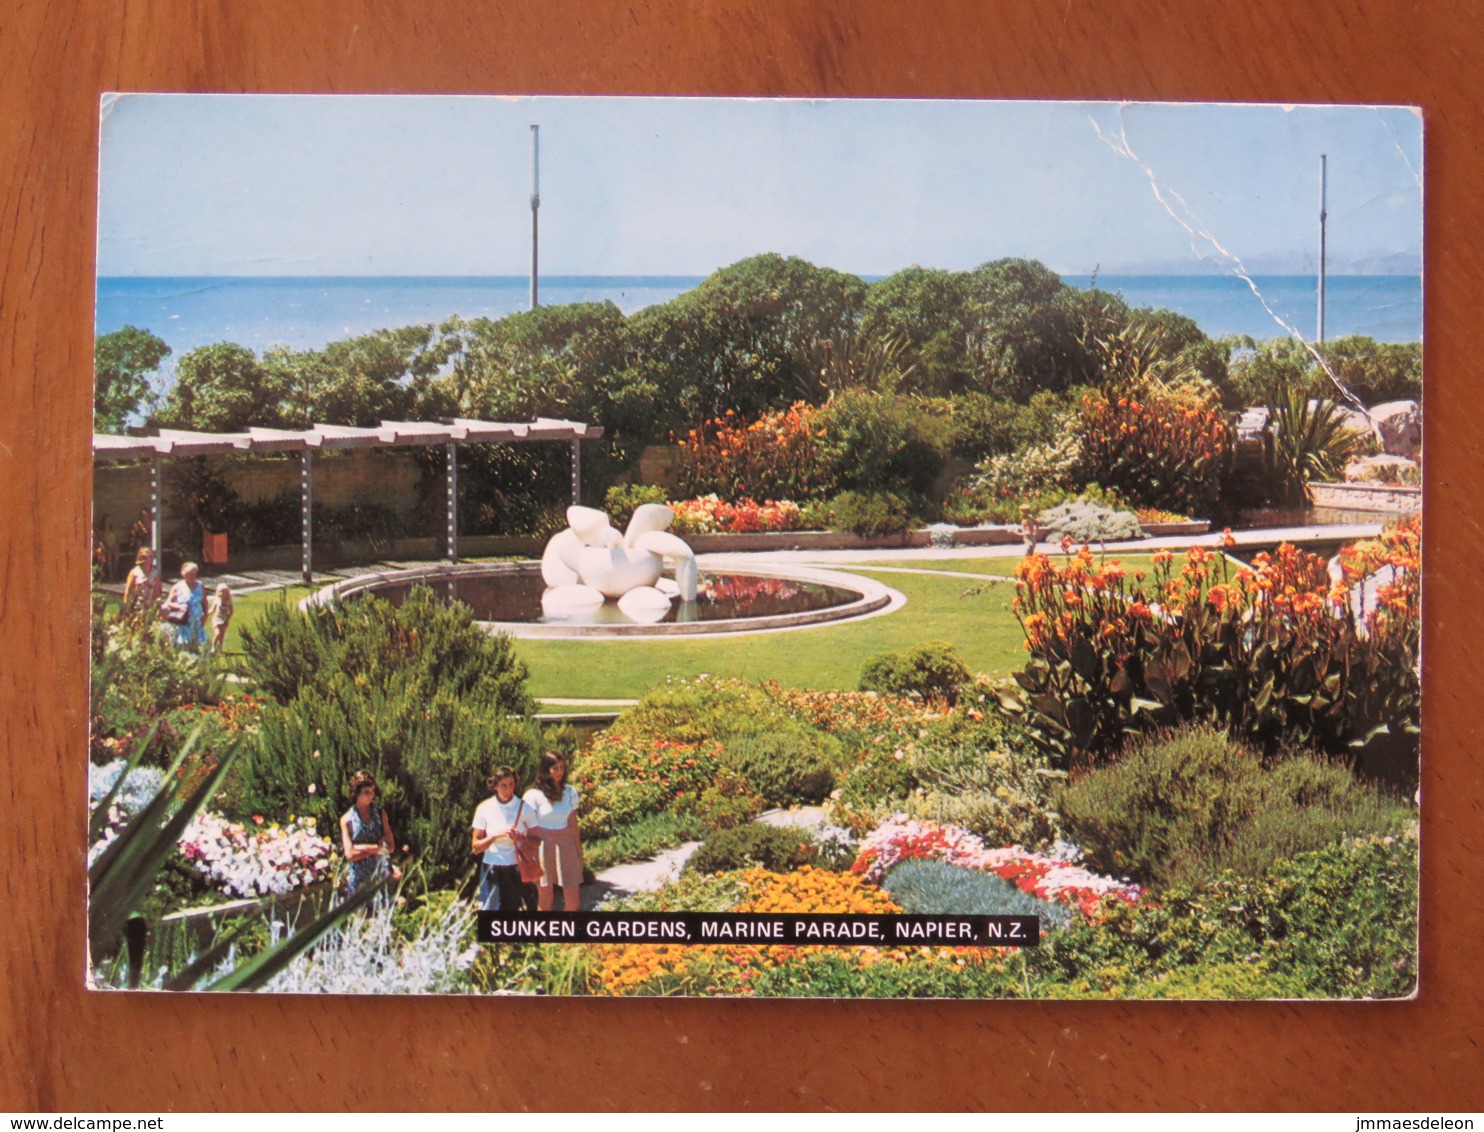 New Zealand 1998 Postcard "Sunken Gardens Marine Parade Napier" To Scotland - Ship - Covers & Documents